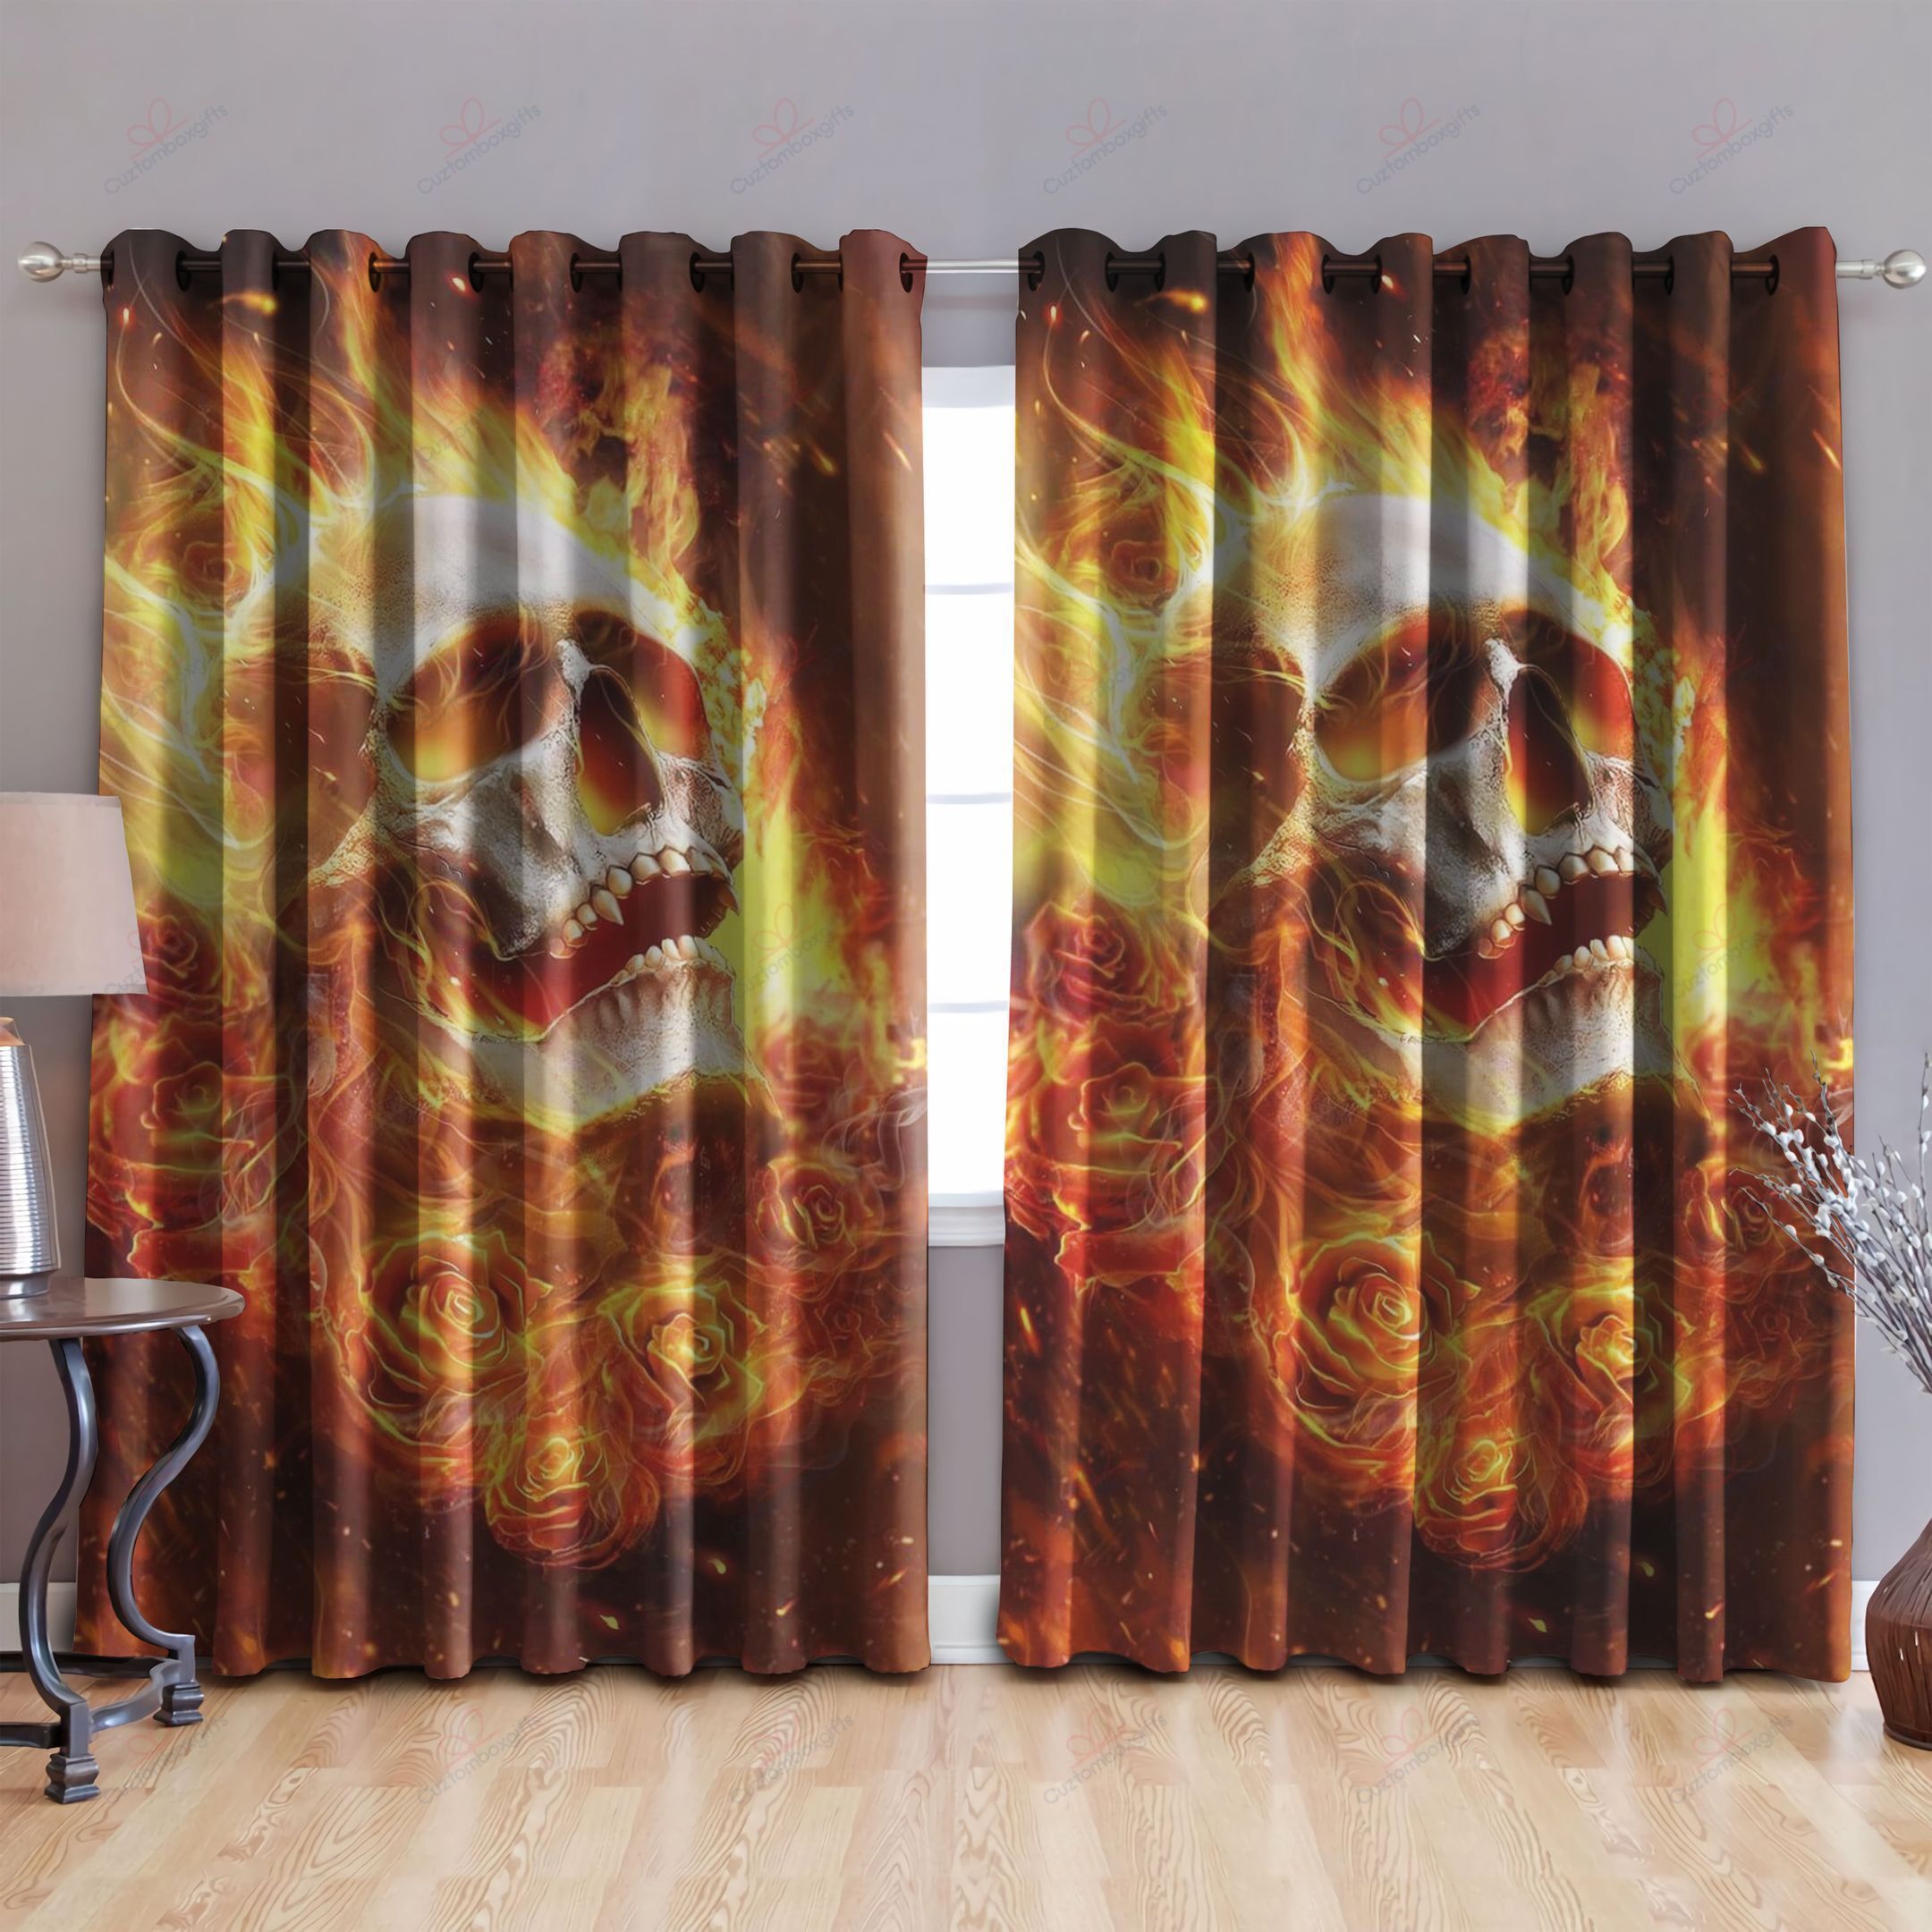 Skull Fire Printed Window Curtain Home Decor